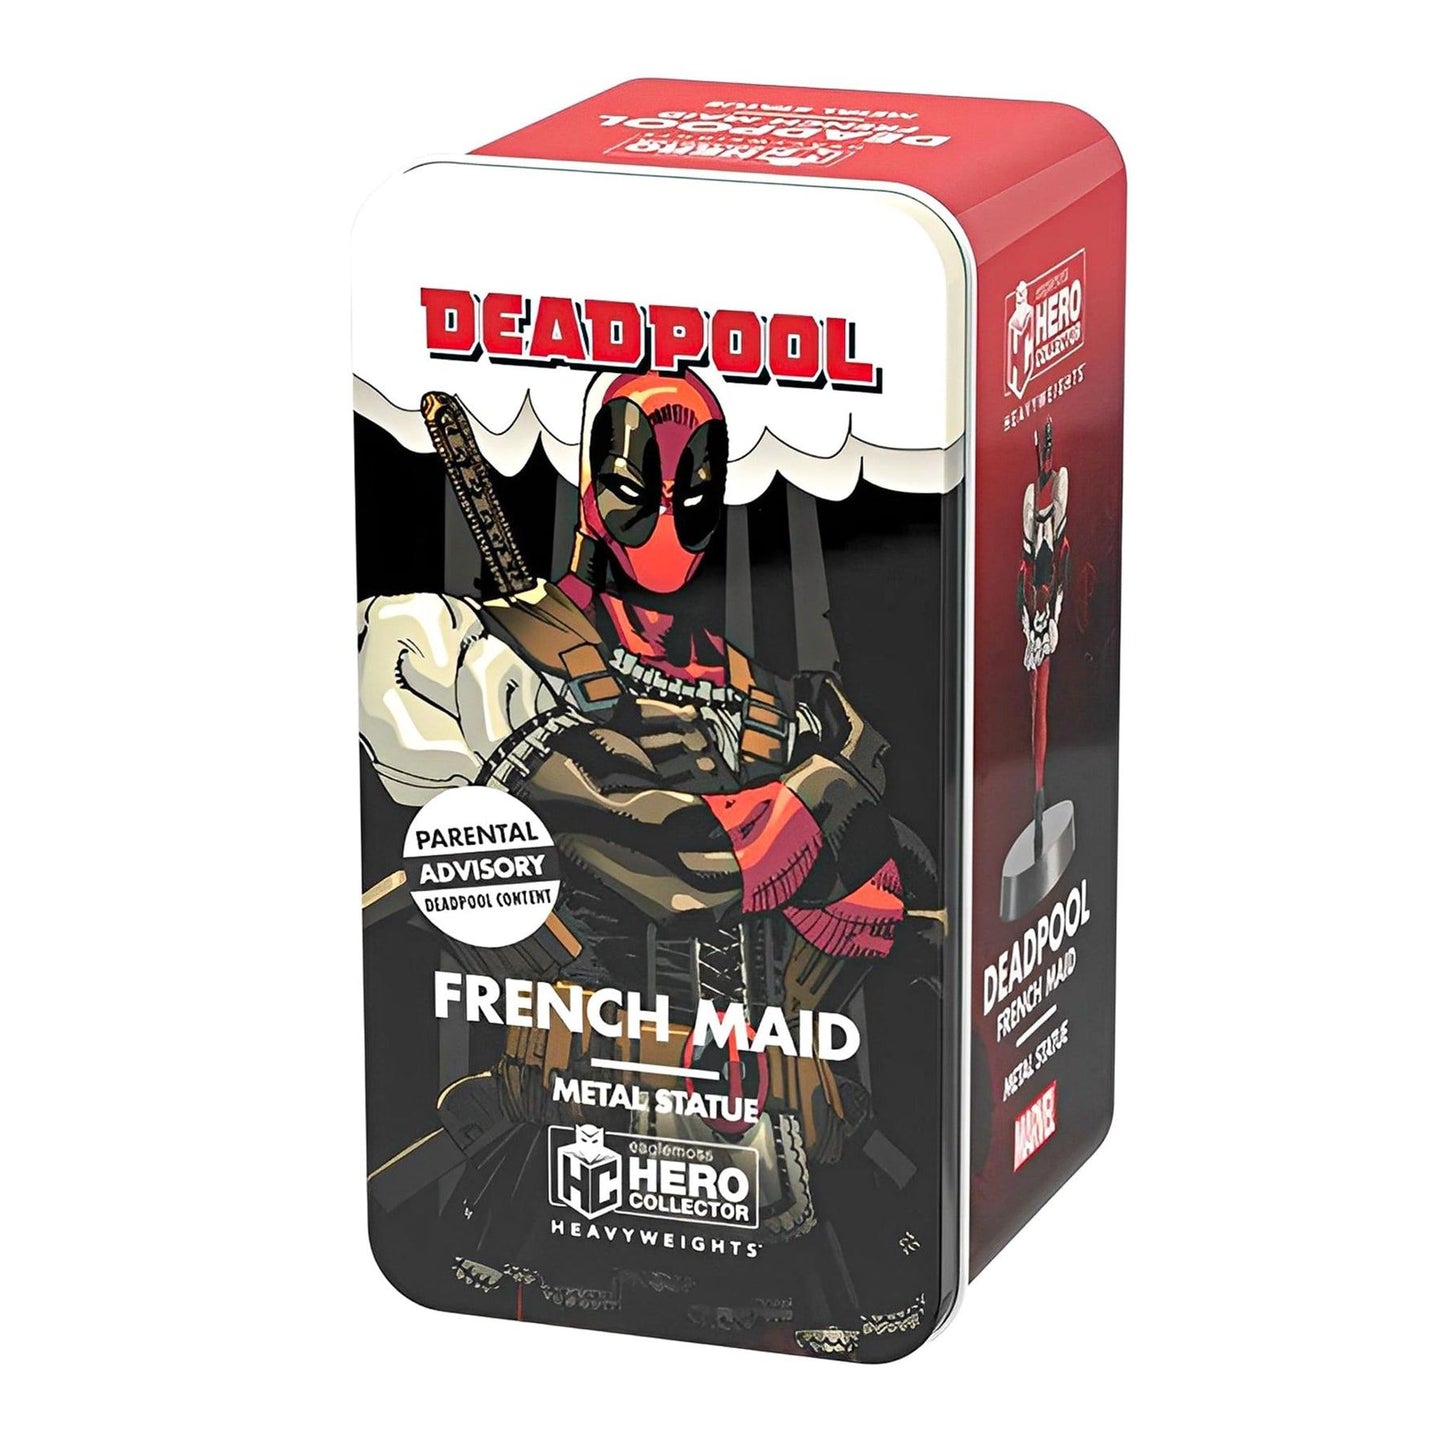 Deadpool FRENCH MAID Metal Statue 1:18 Scale Figurine (Marvel Eaglemoss Heavyweights)